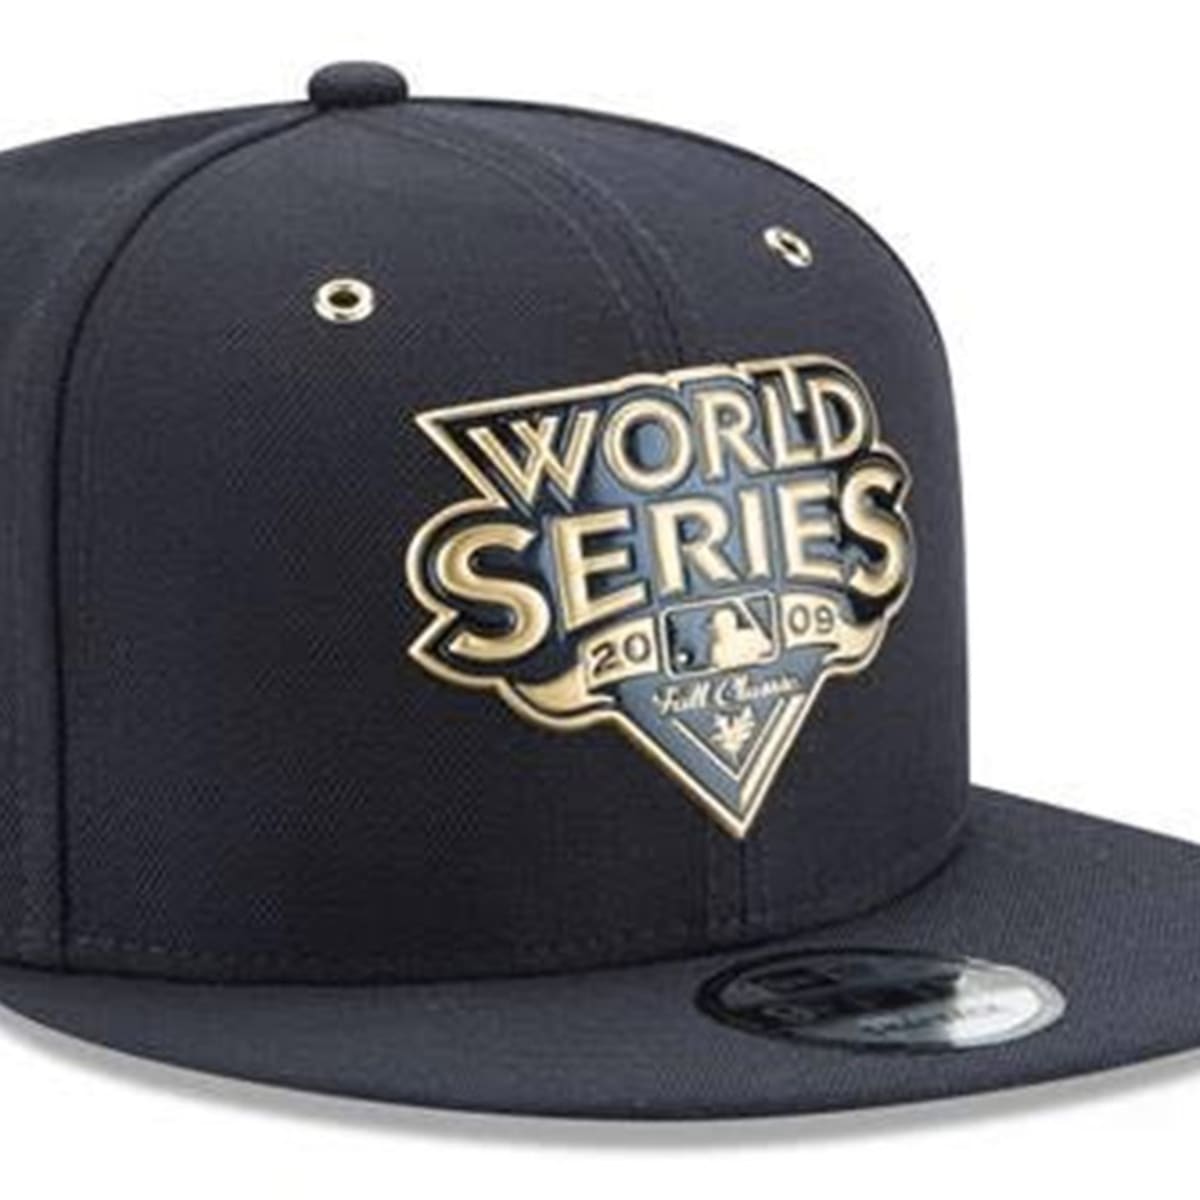 New York Yankees 27-Time World Series Champions Commemorative